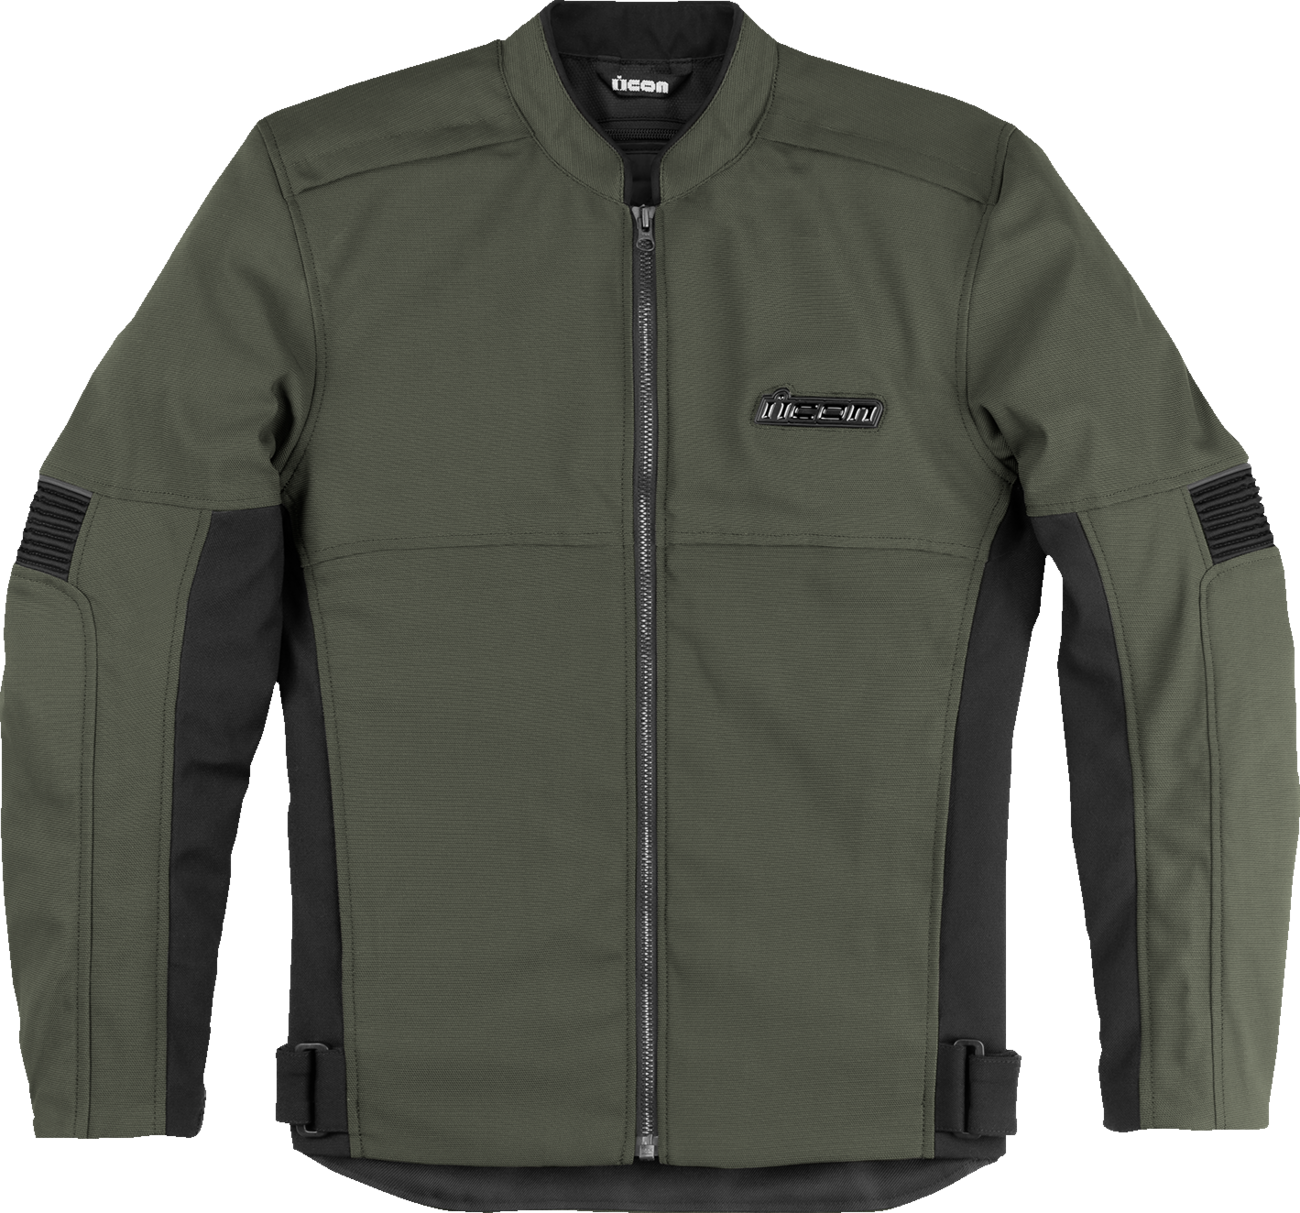 ICON Slabtown Jacket - Green - Medium 2820-6262